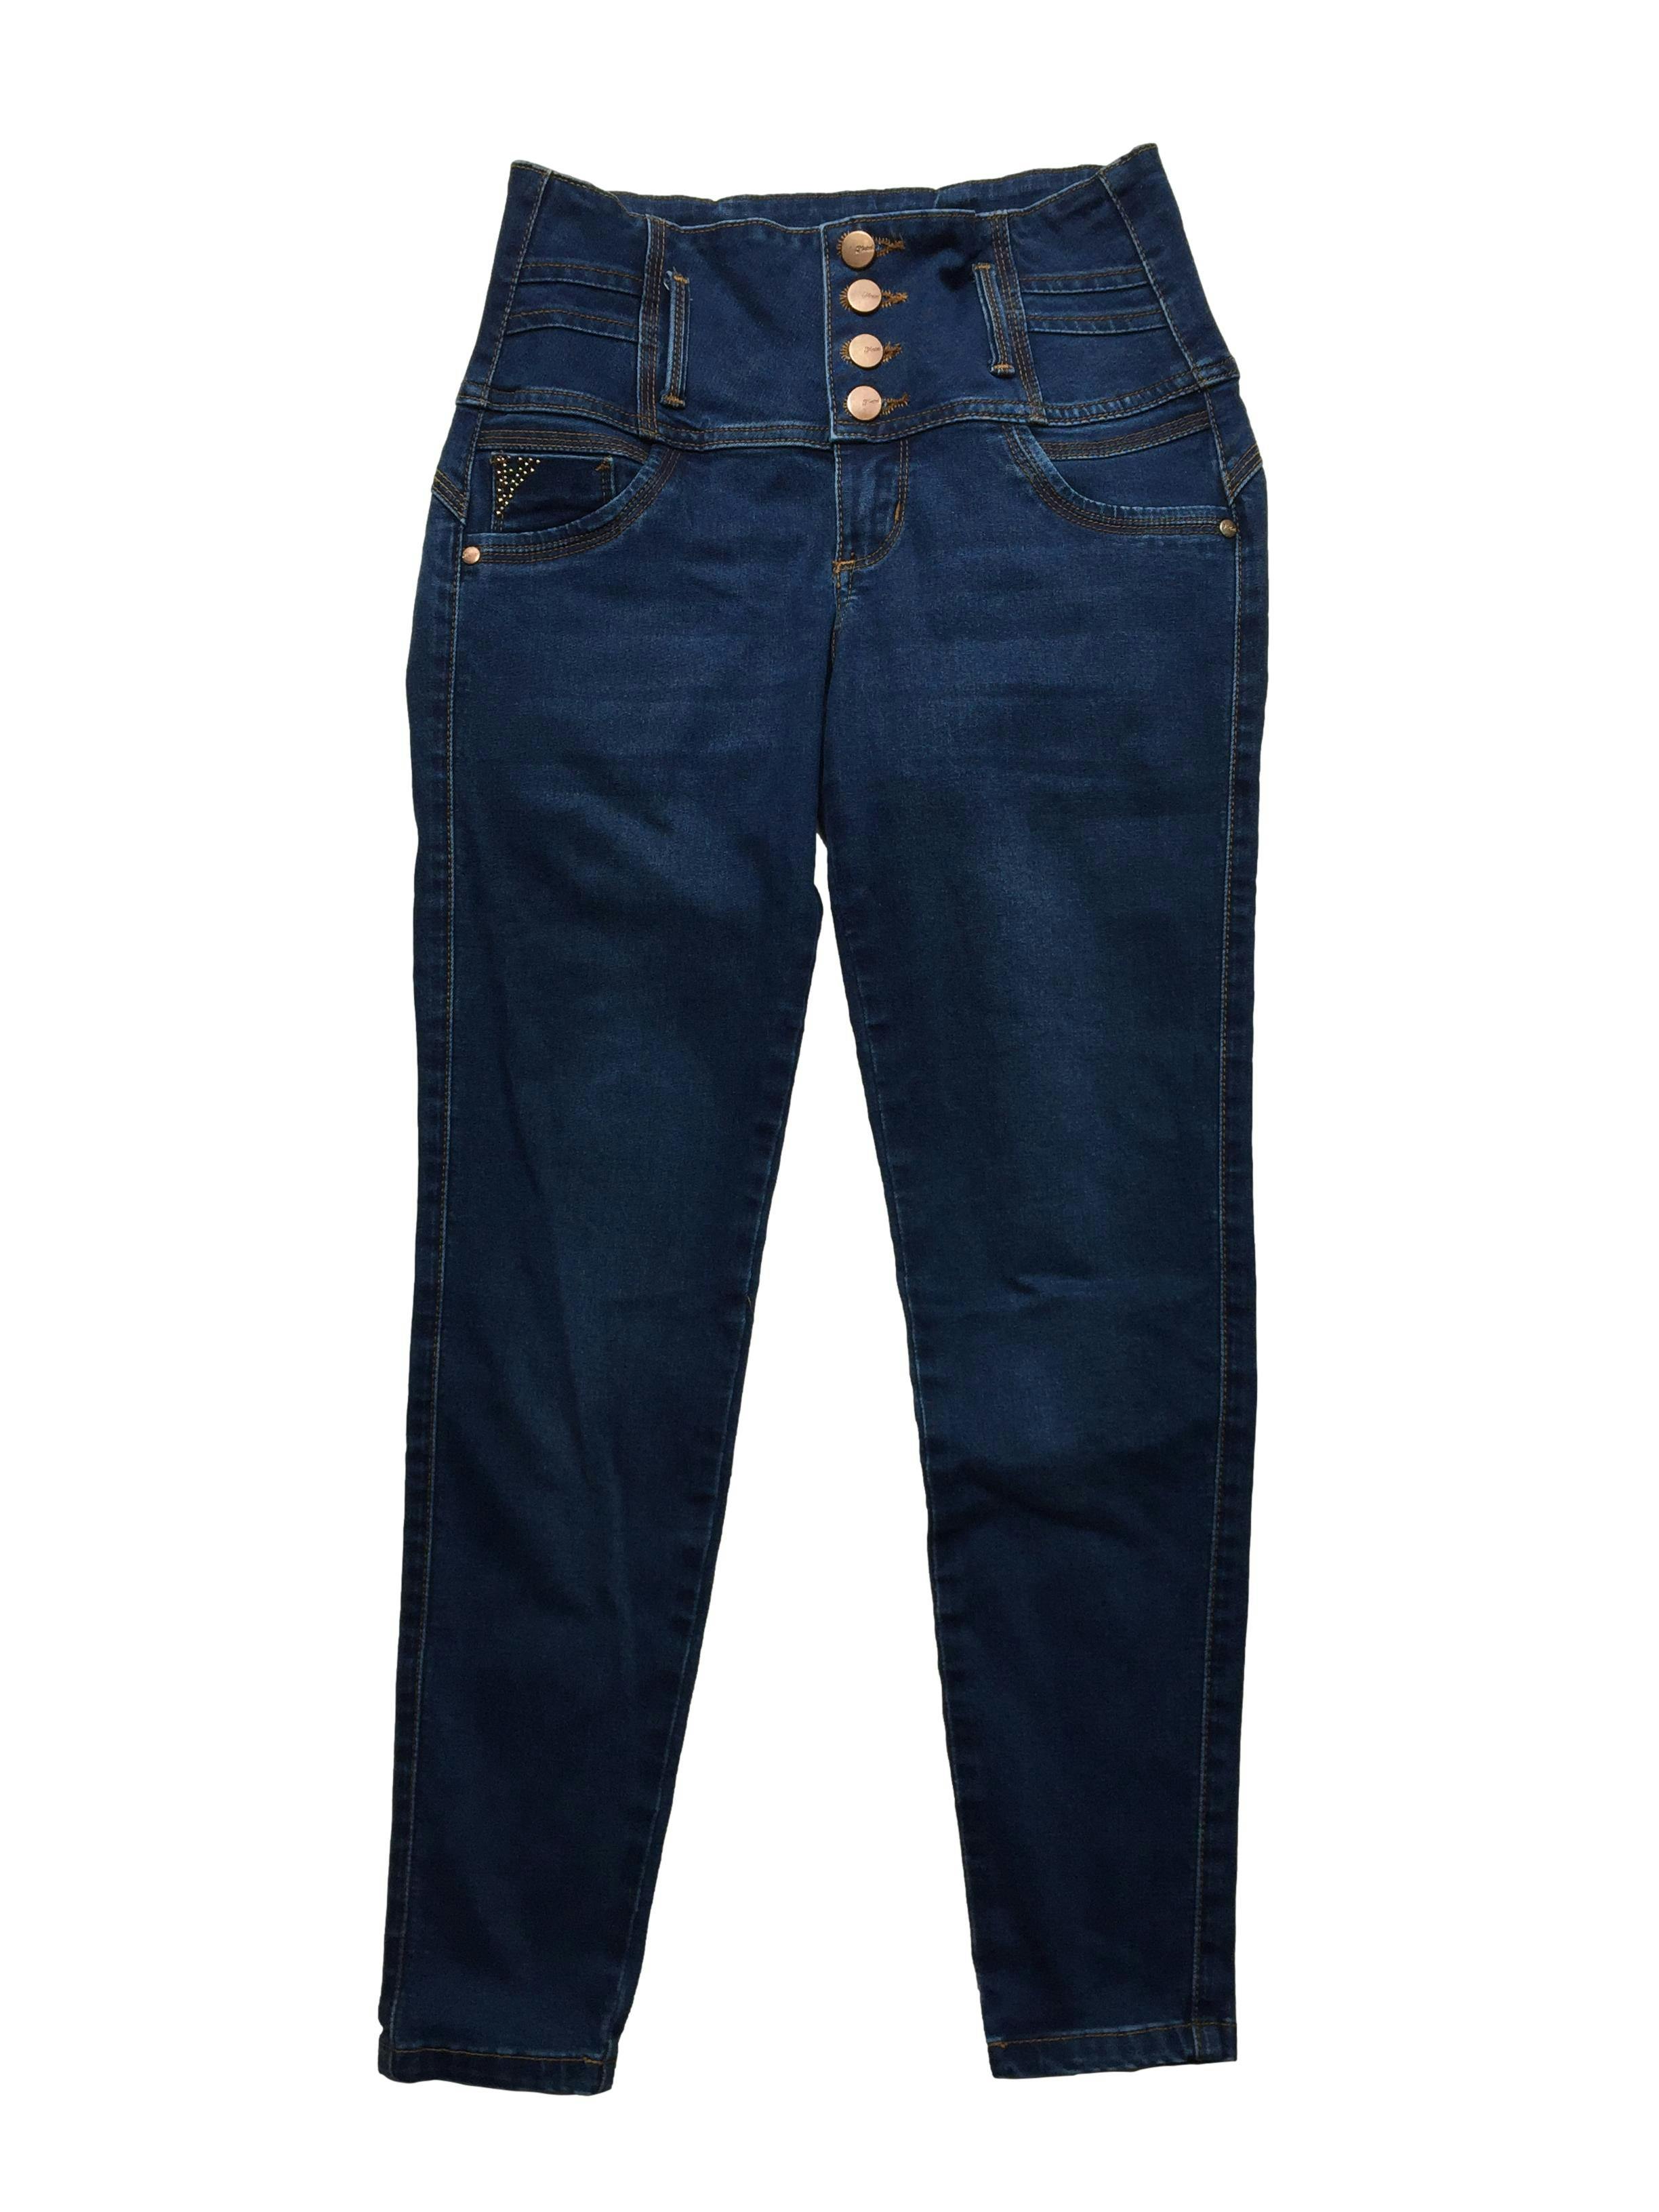 Skinny jean azul de tiro alto, pretina ancha y falsos bolsillos. Cintura 70cm, Largo 90cm.